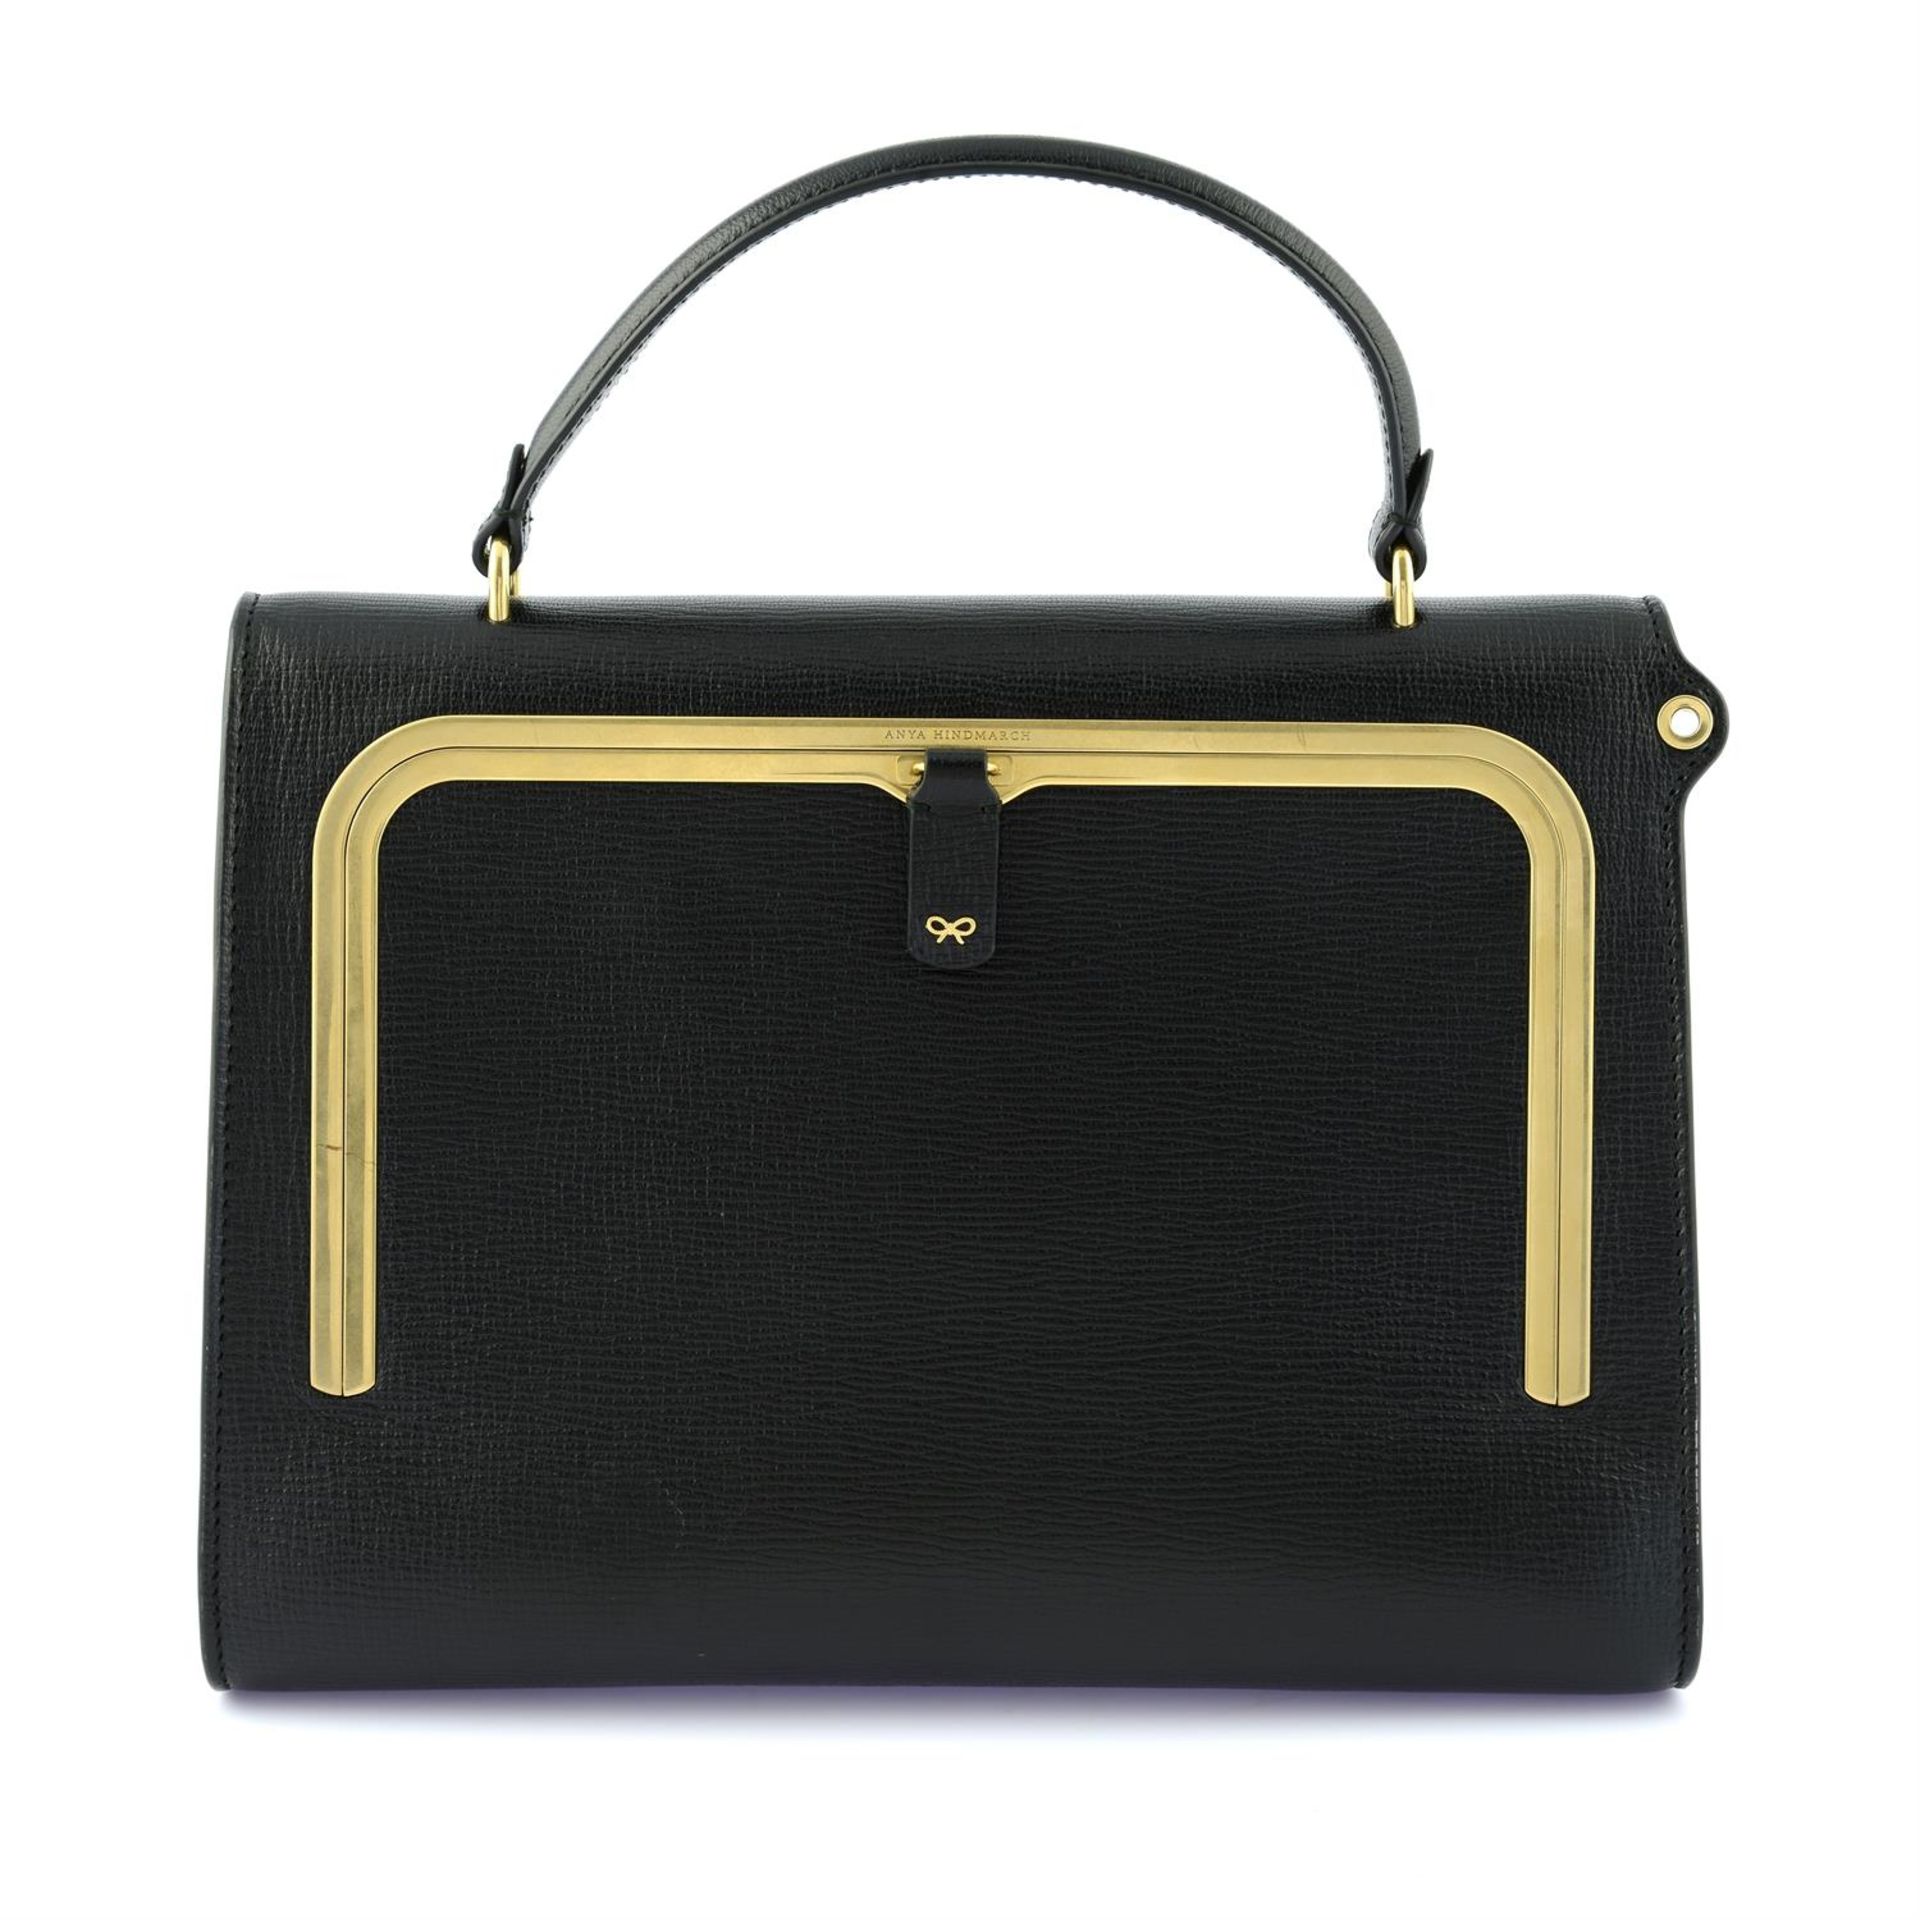 ANYA HINDMARCH - a black leather handbag.